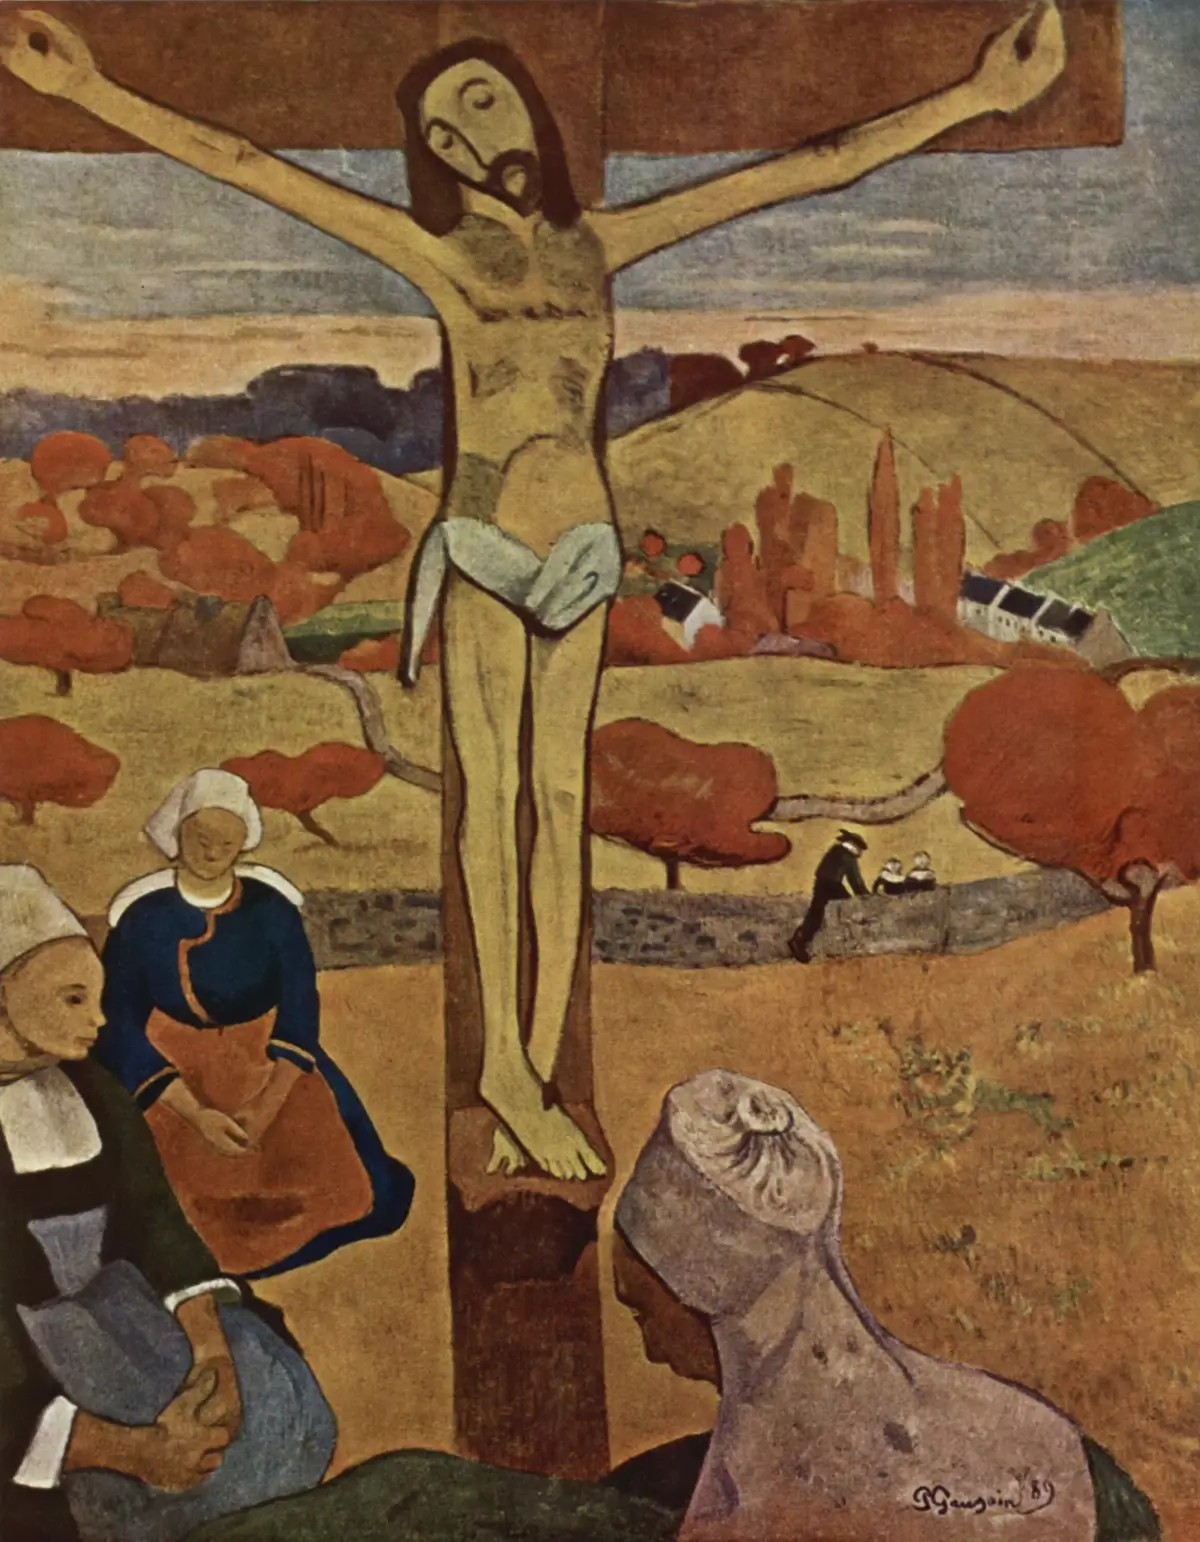 Paul Gauguin, "The Yellow Christ", 1889